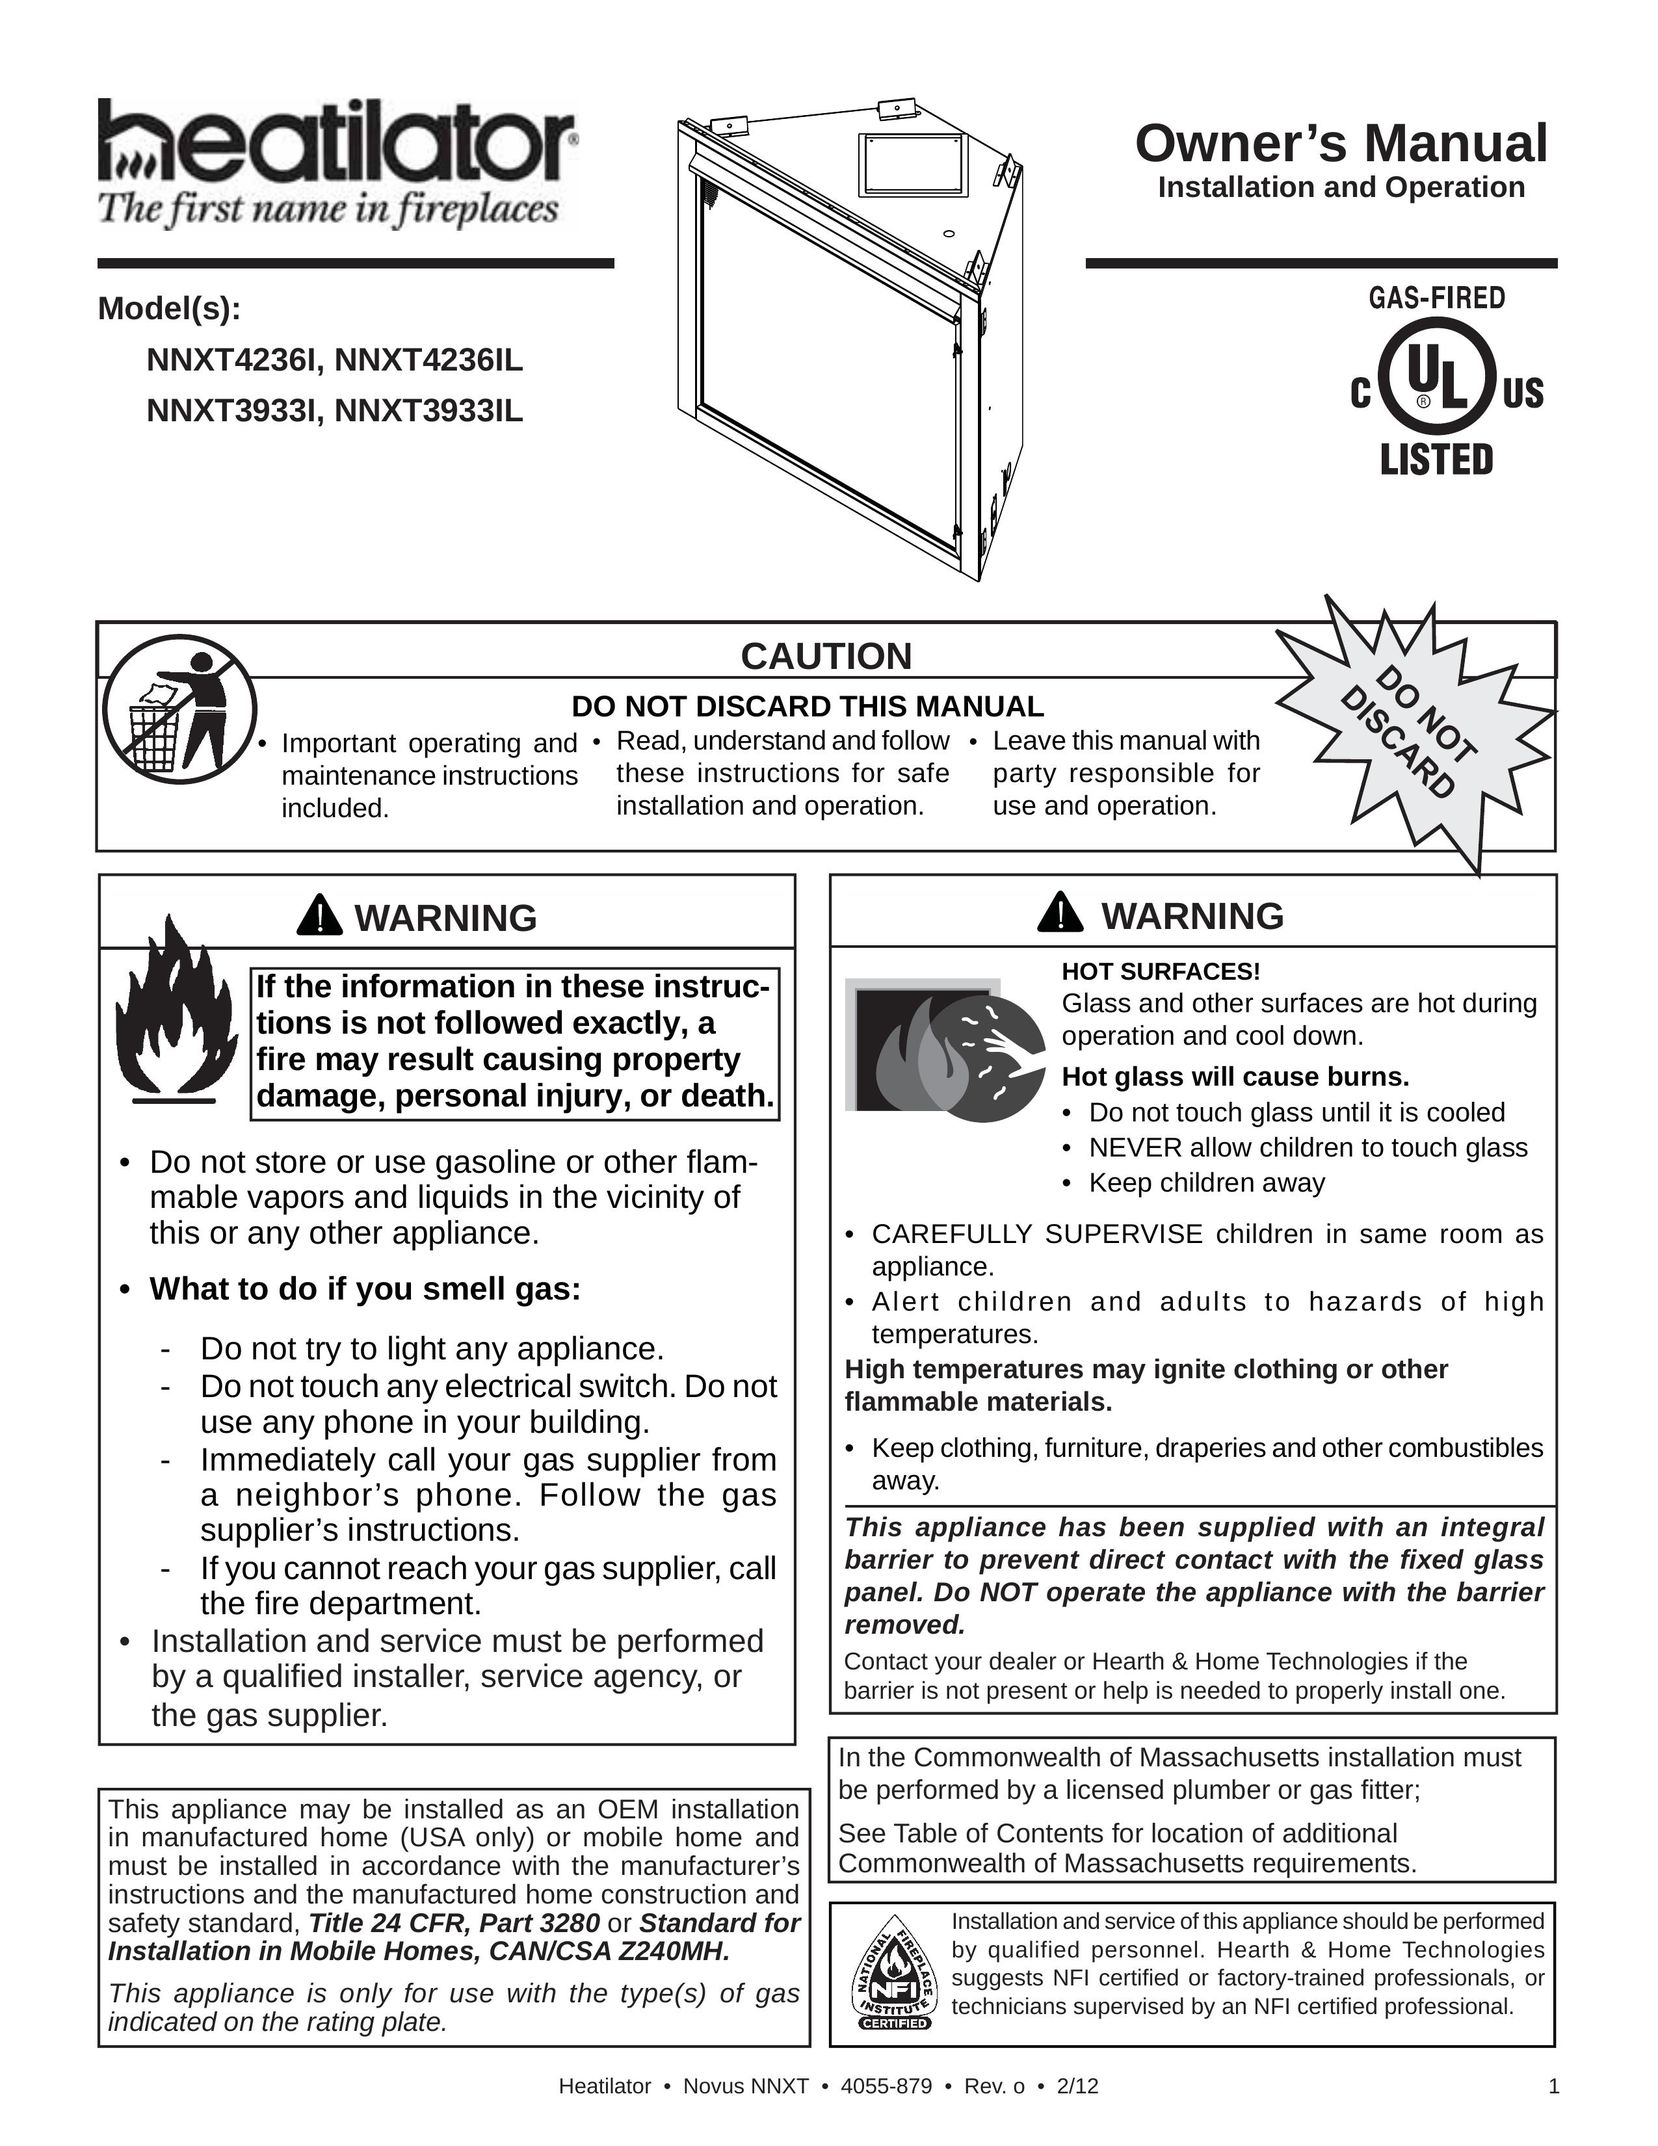 Heatiator NNXT3933IL Indoor Fireplace User Manual